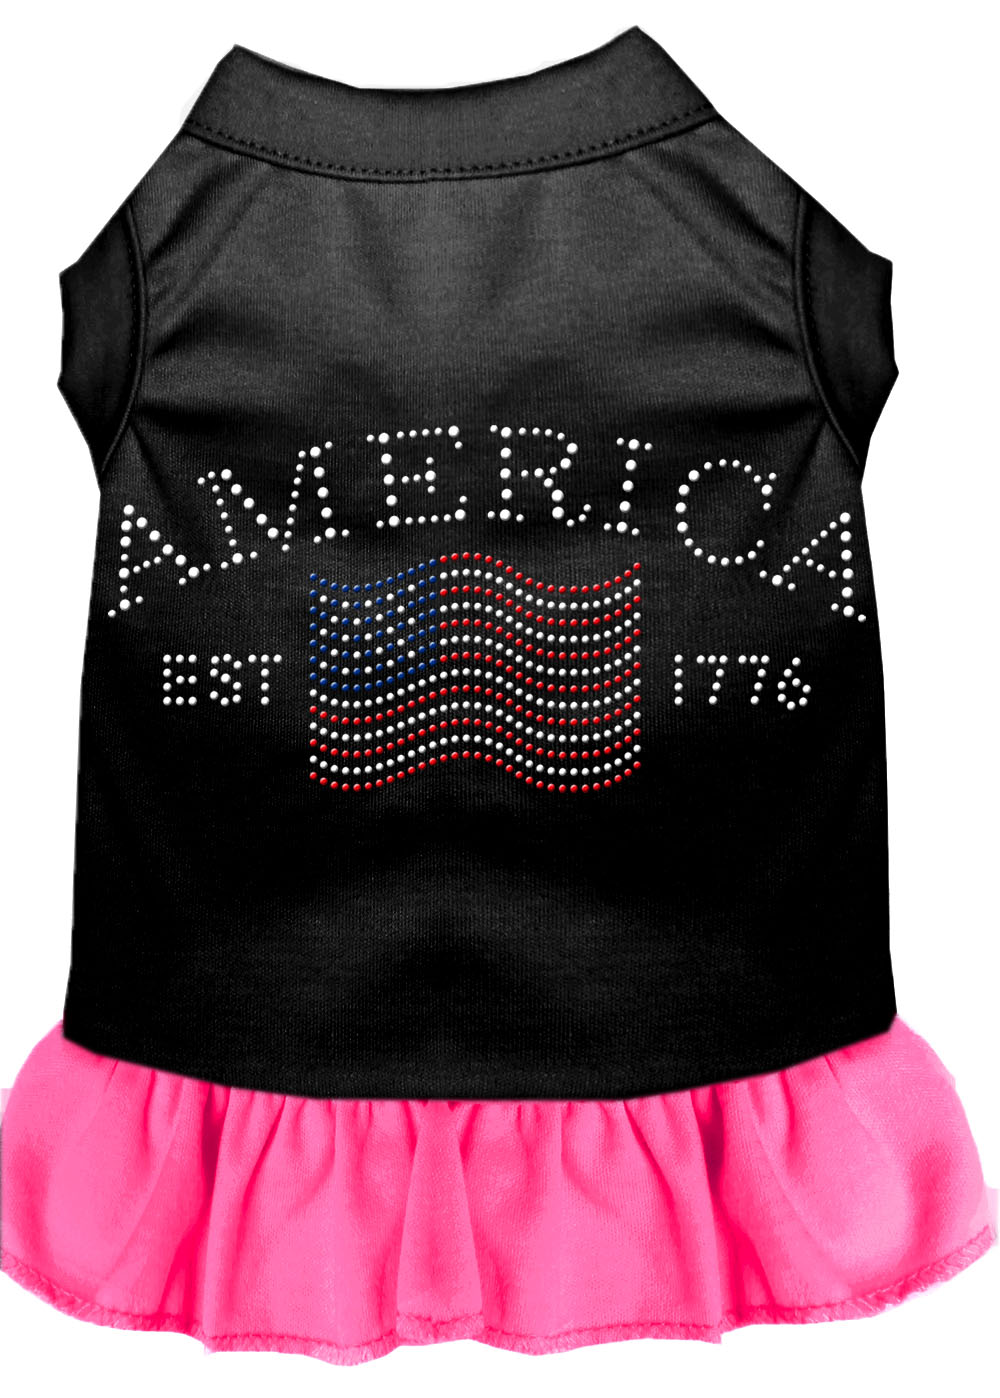 Classic America Rhinestone Dress Black with Bright Pink Sm